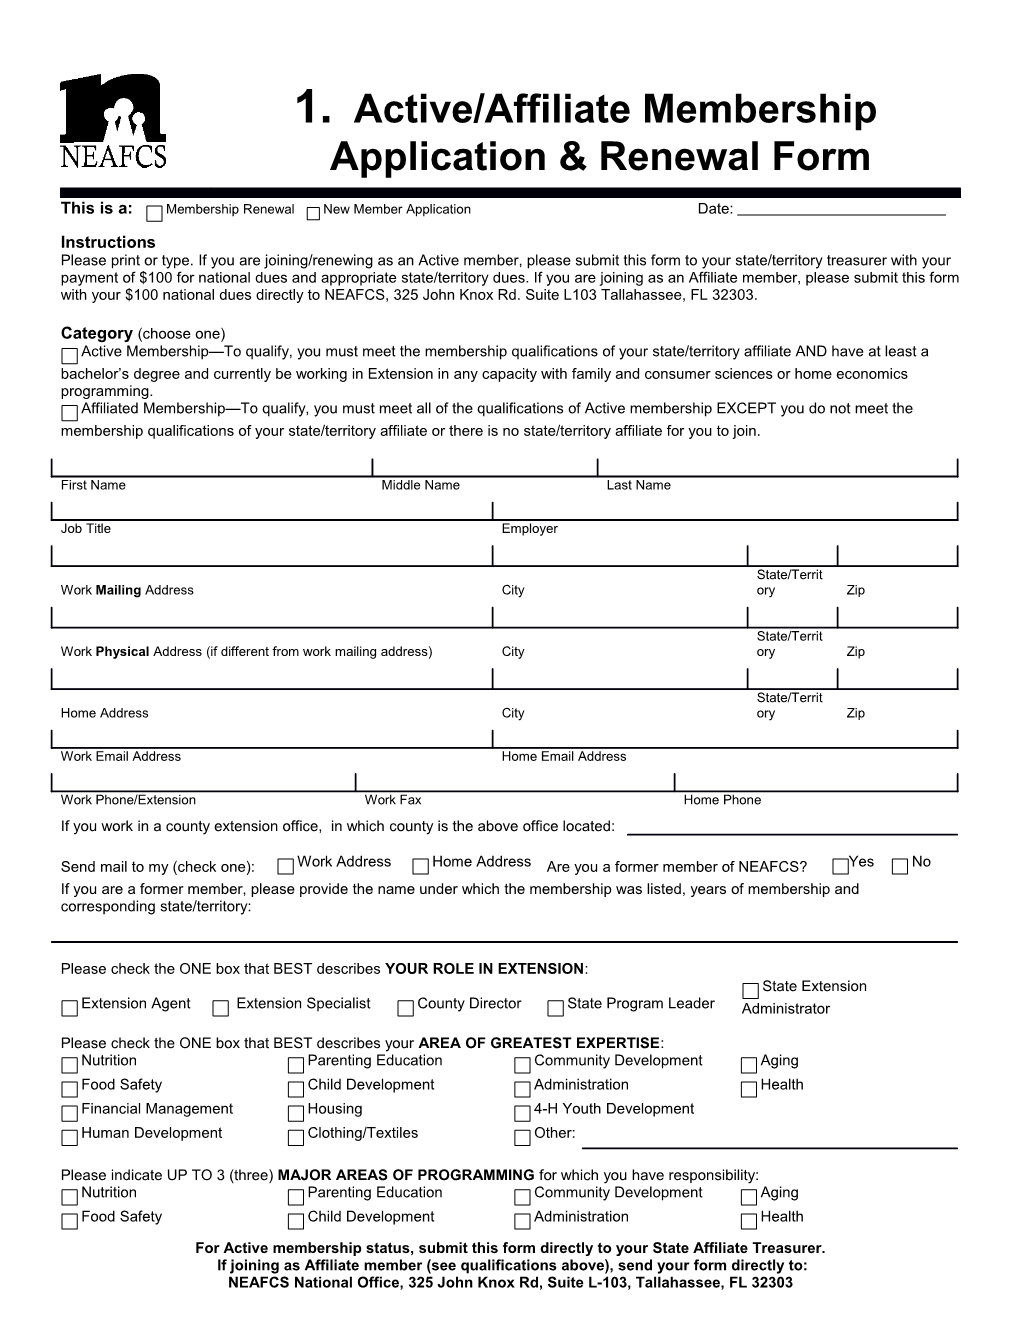 Active/Affiliatemembership Application & Renewal Form